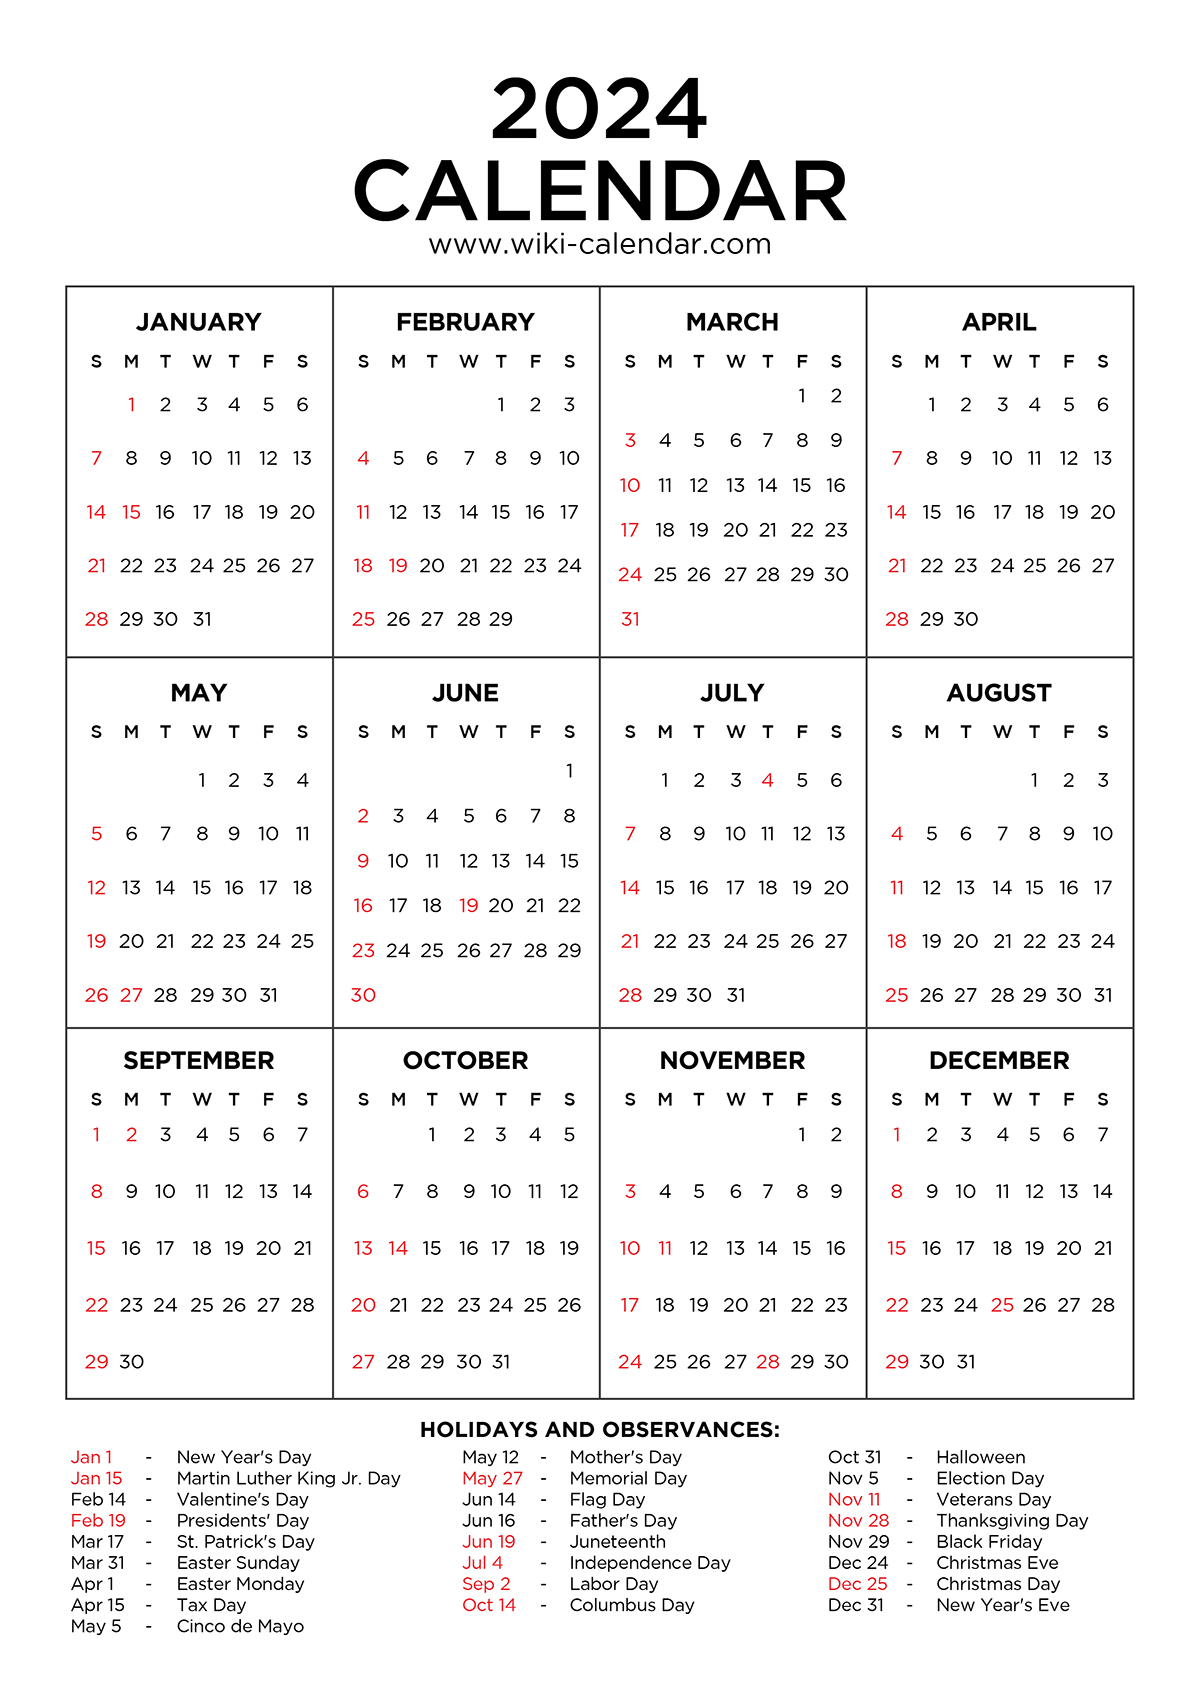 Year 2024 Calendar Printable With Holidays - Wiki Calendar intended for Free Printable Calendar 2024 With Photo